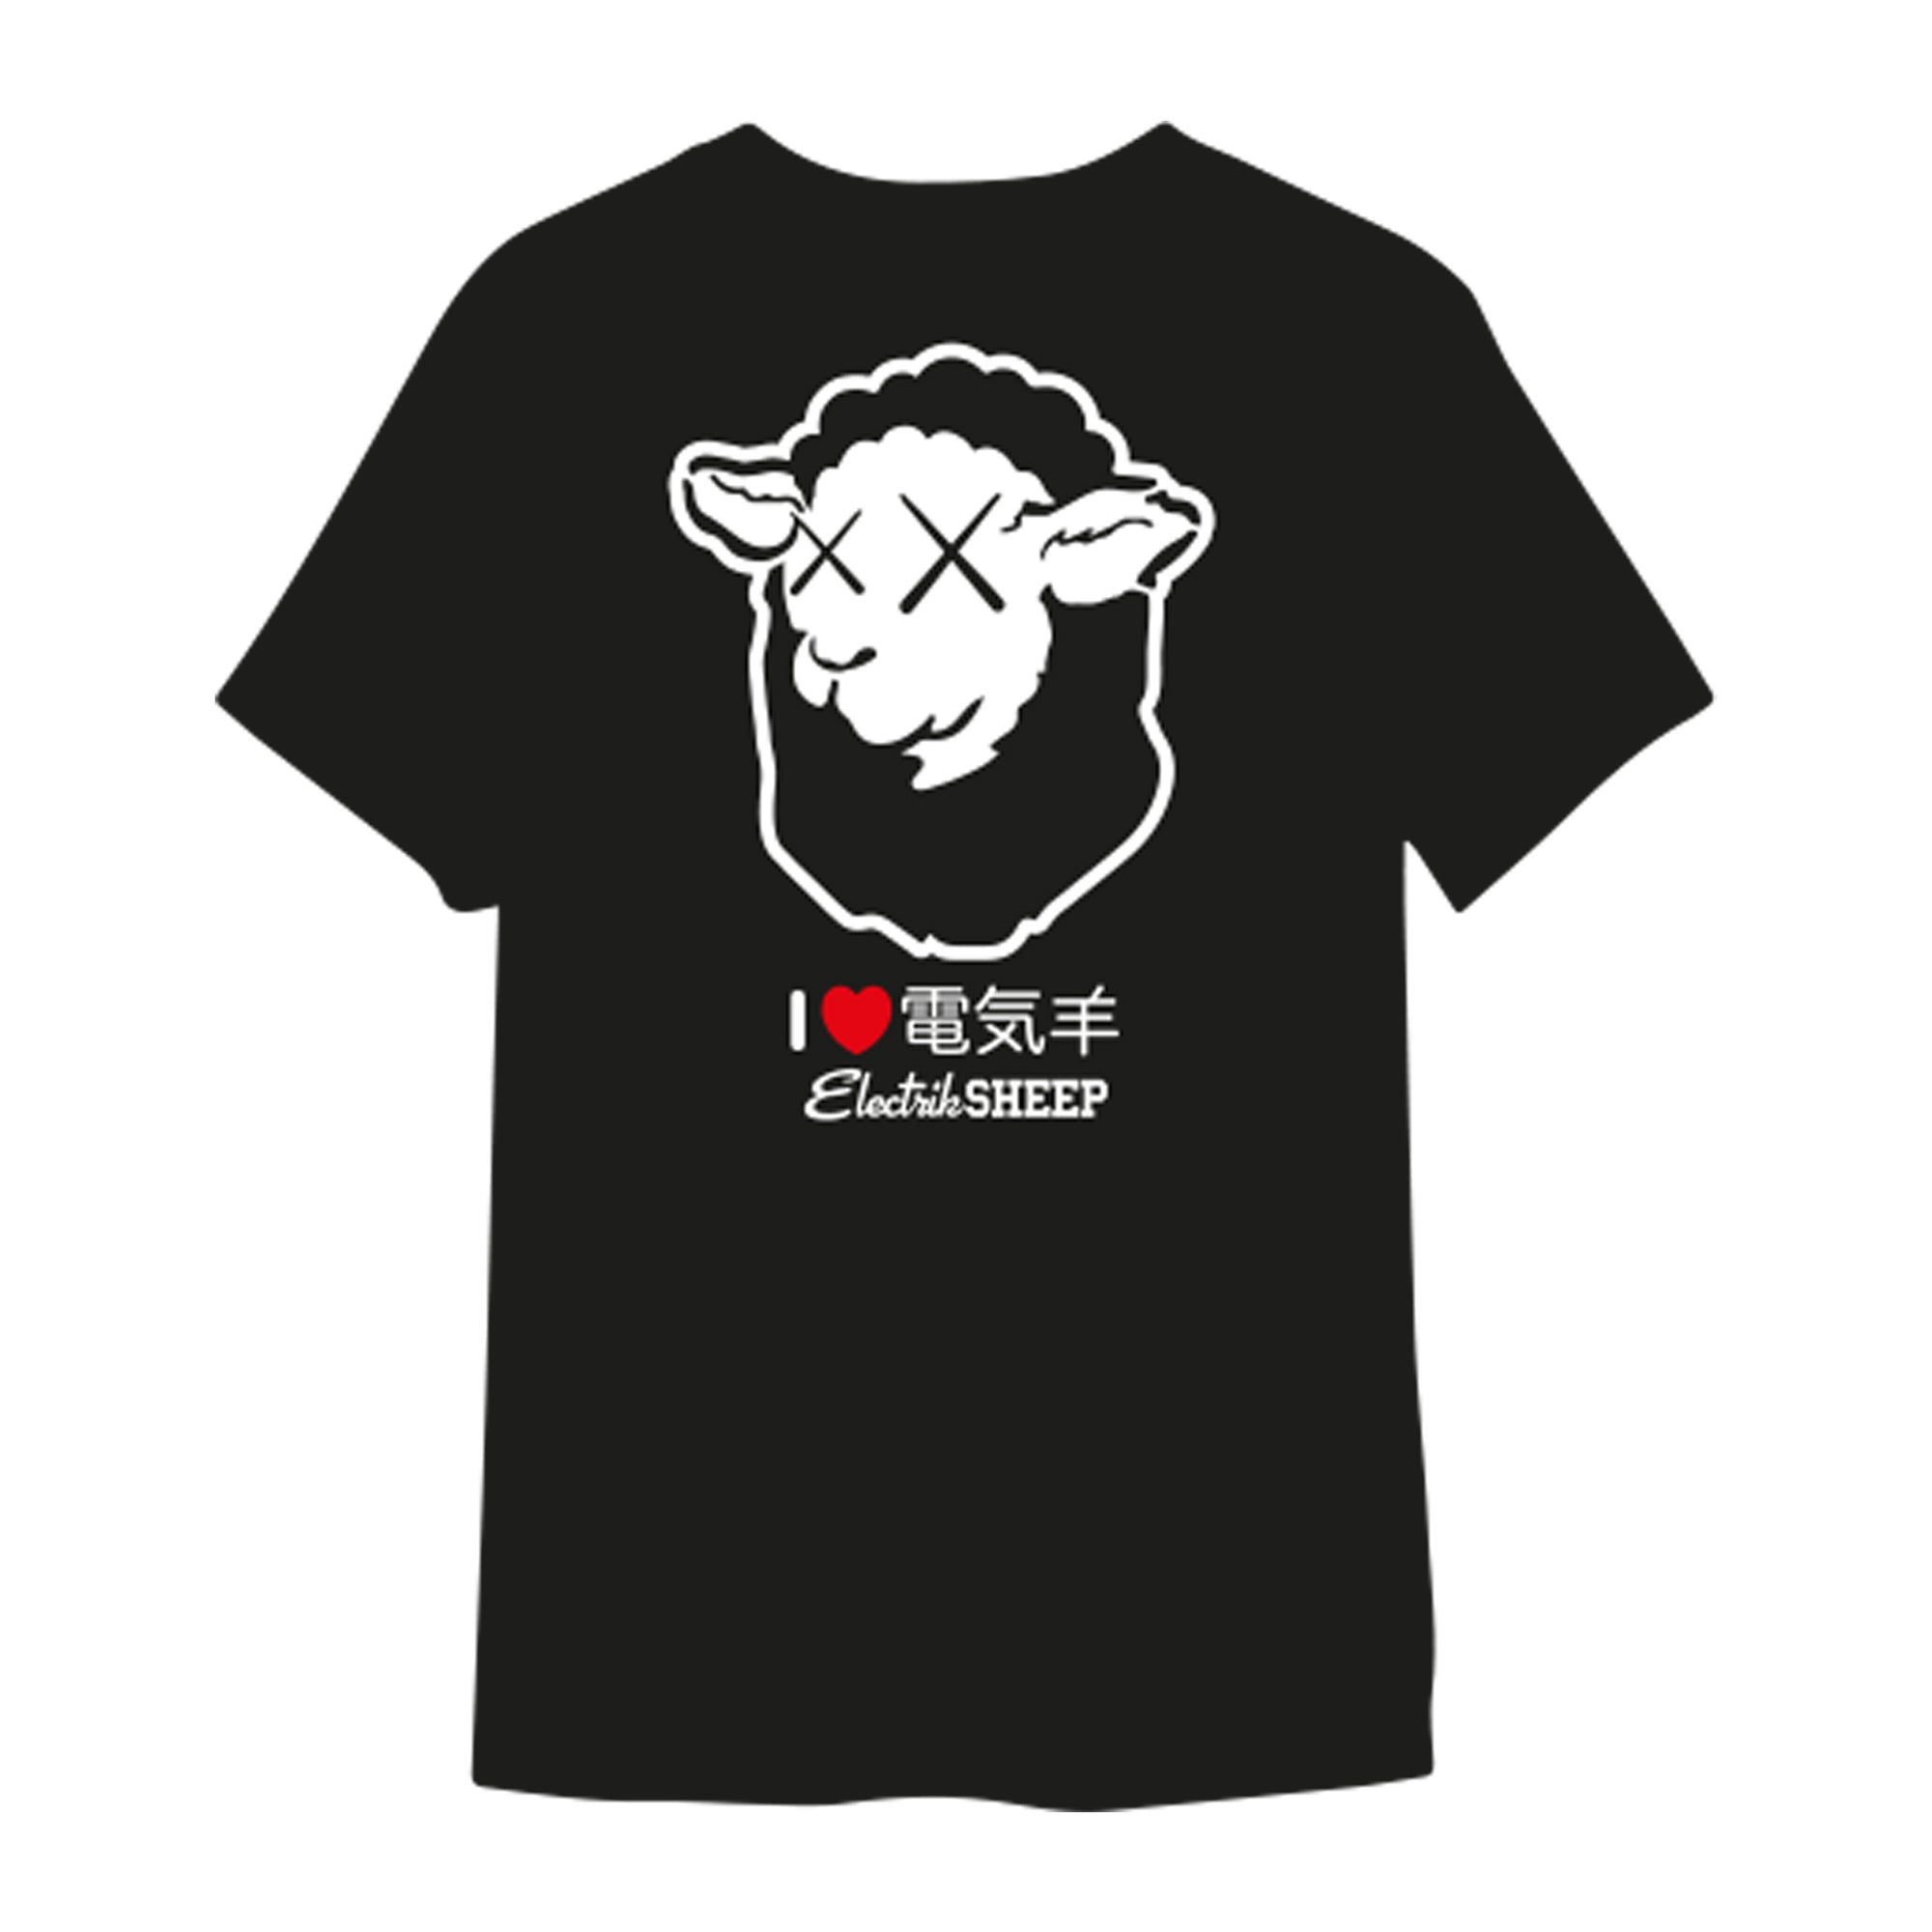 Electrik Sheep T-Shirt